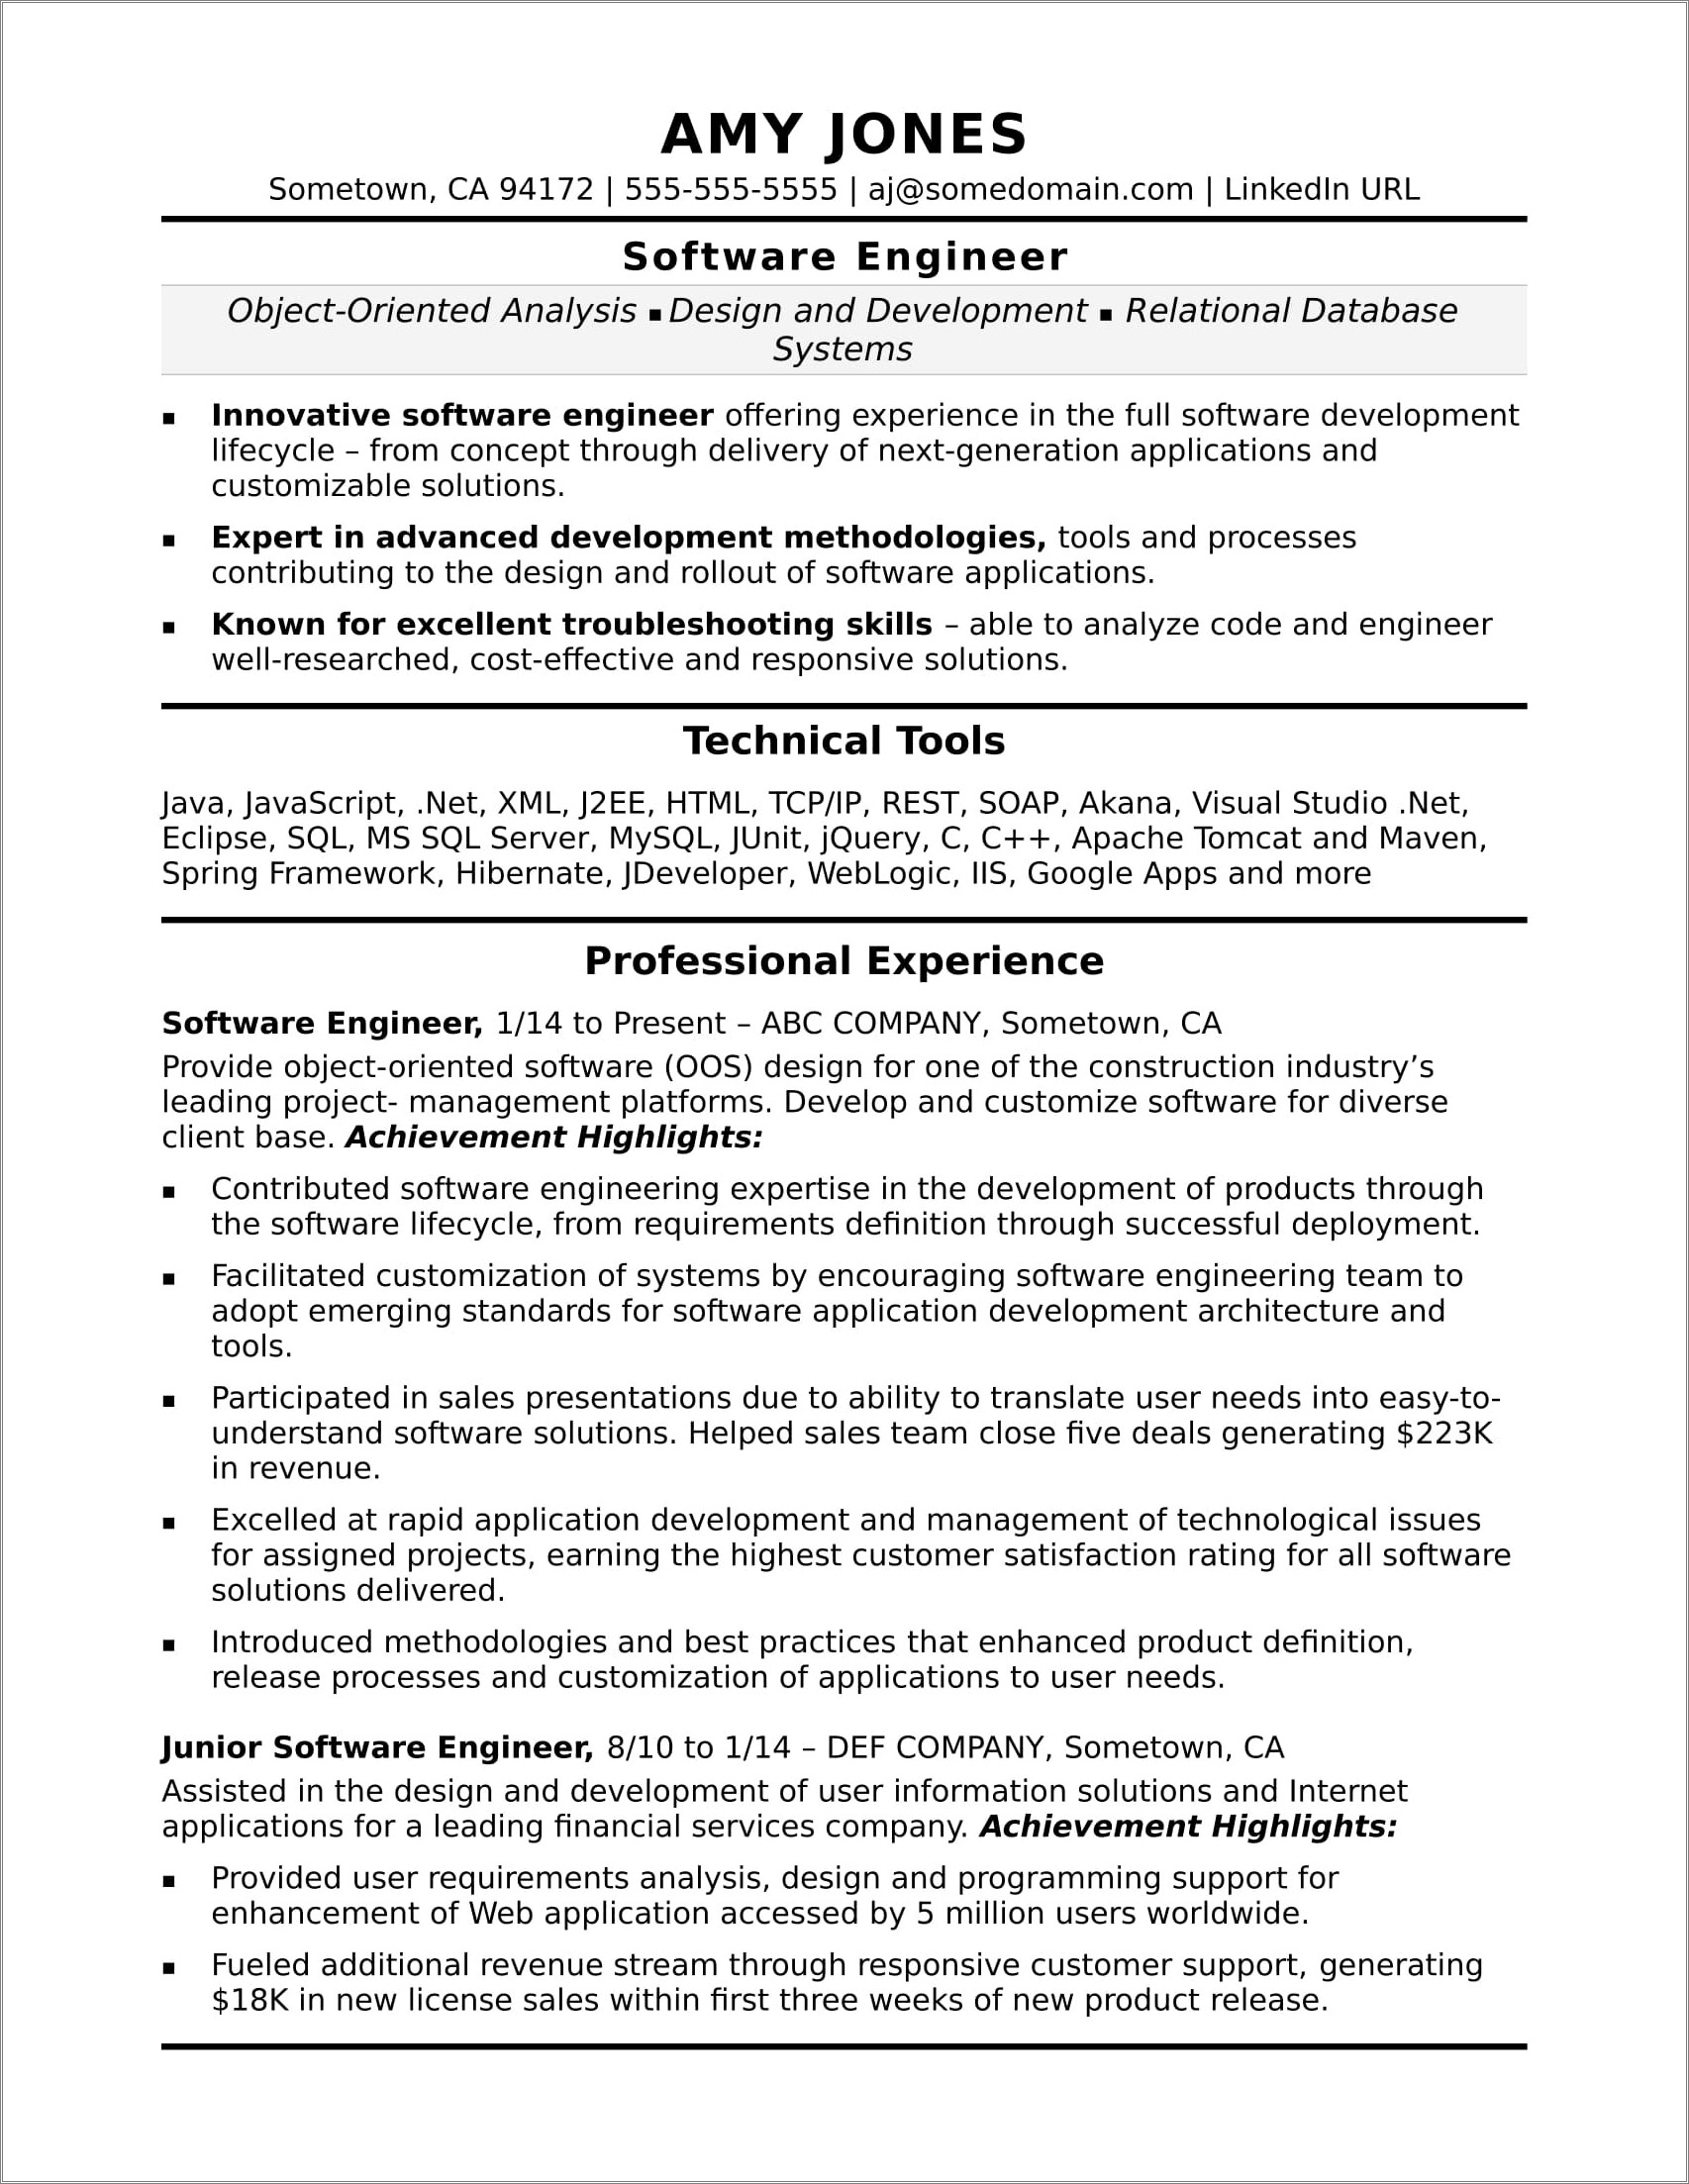 Resume Career Summary Engineering Entry Level